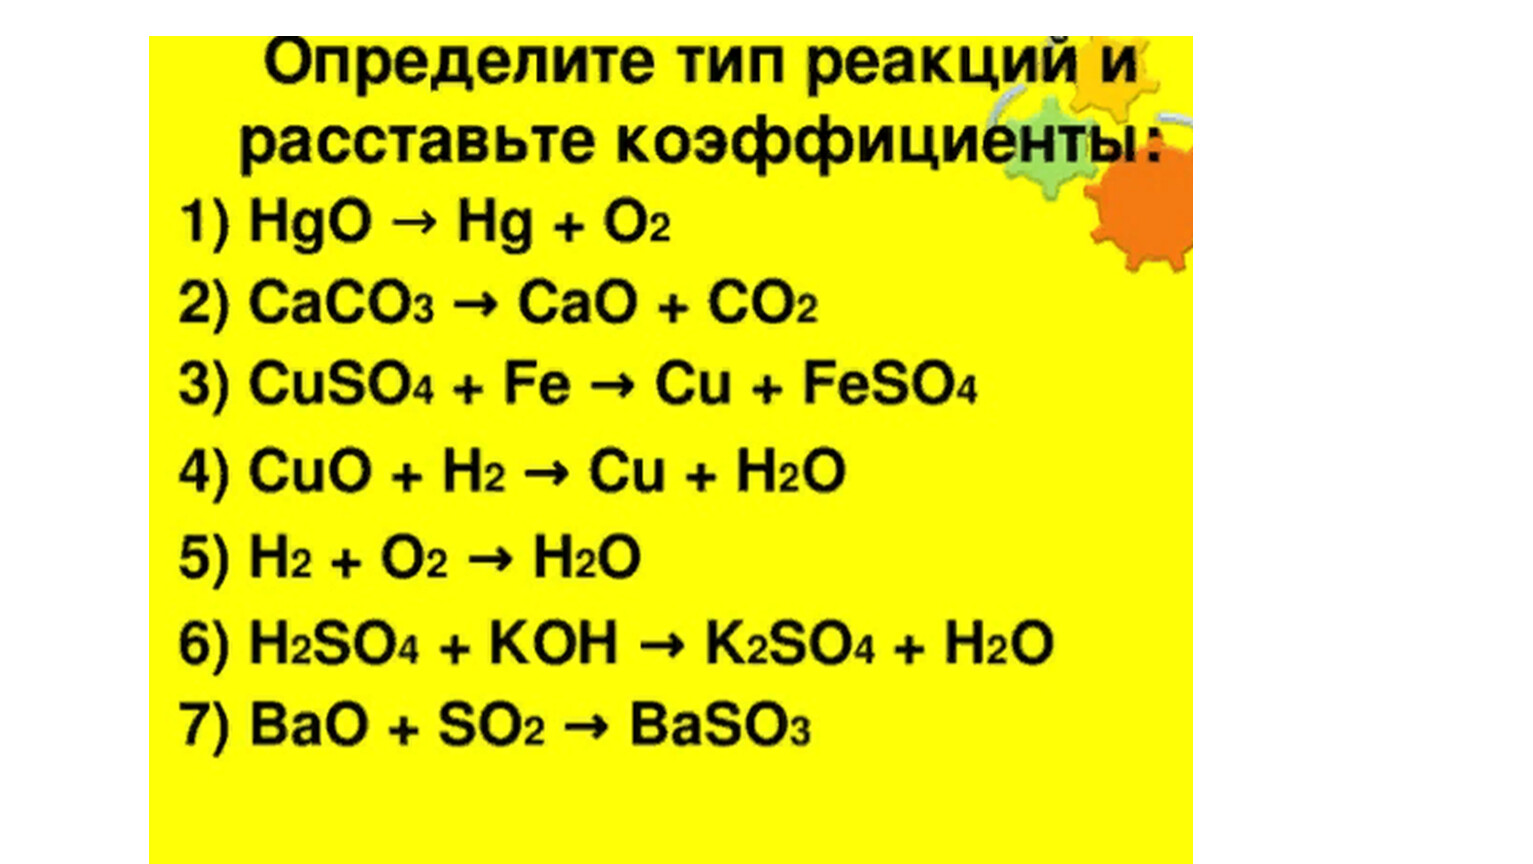 Caco3 cao co2 177 кдж. Caco3 cao co2 Тип реакции. Расставьте коэффициент и определит Тип рякции. Расставить коэффициенты и определить Тип химической реакции. Расставьте коэффициенты и определите Тип химической реакции.